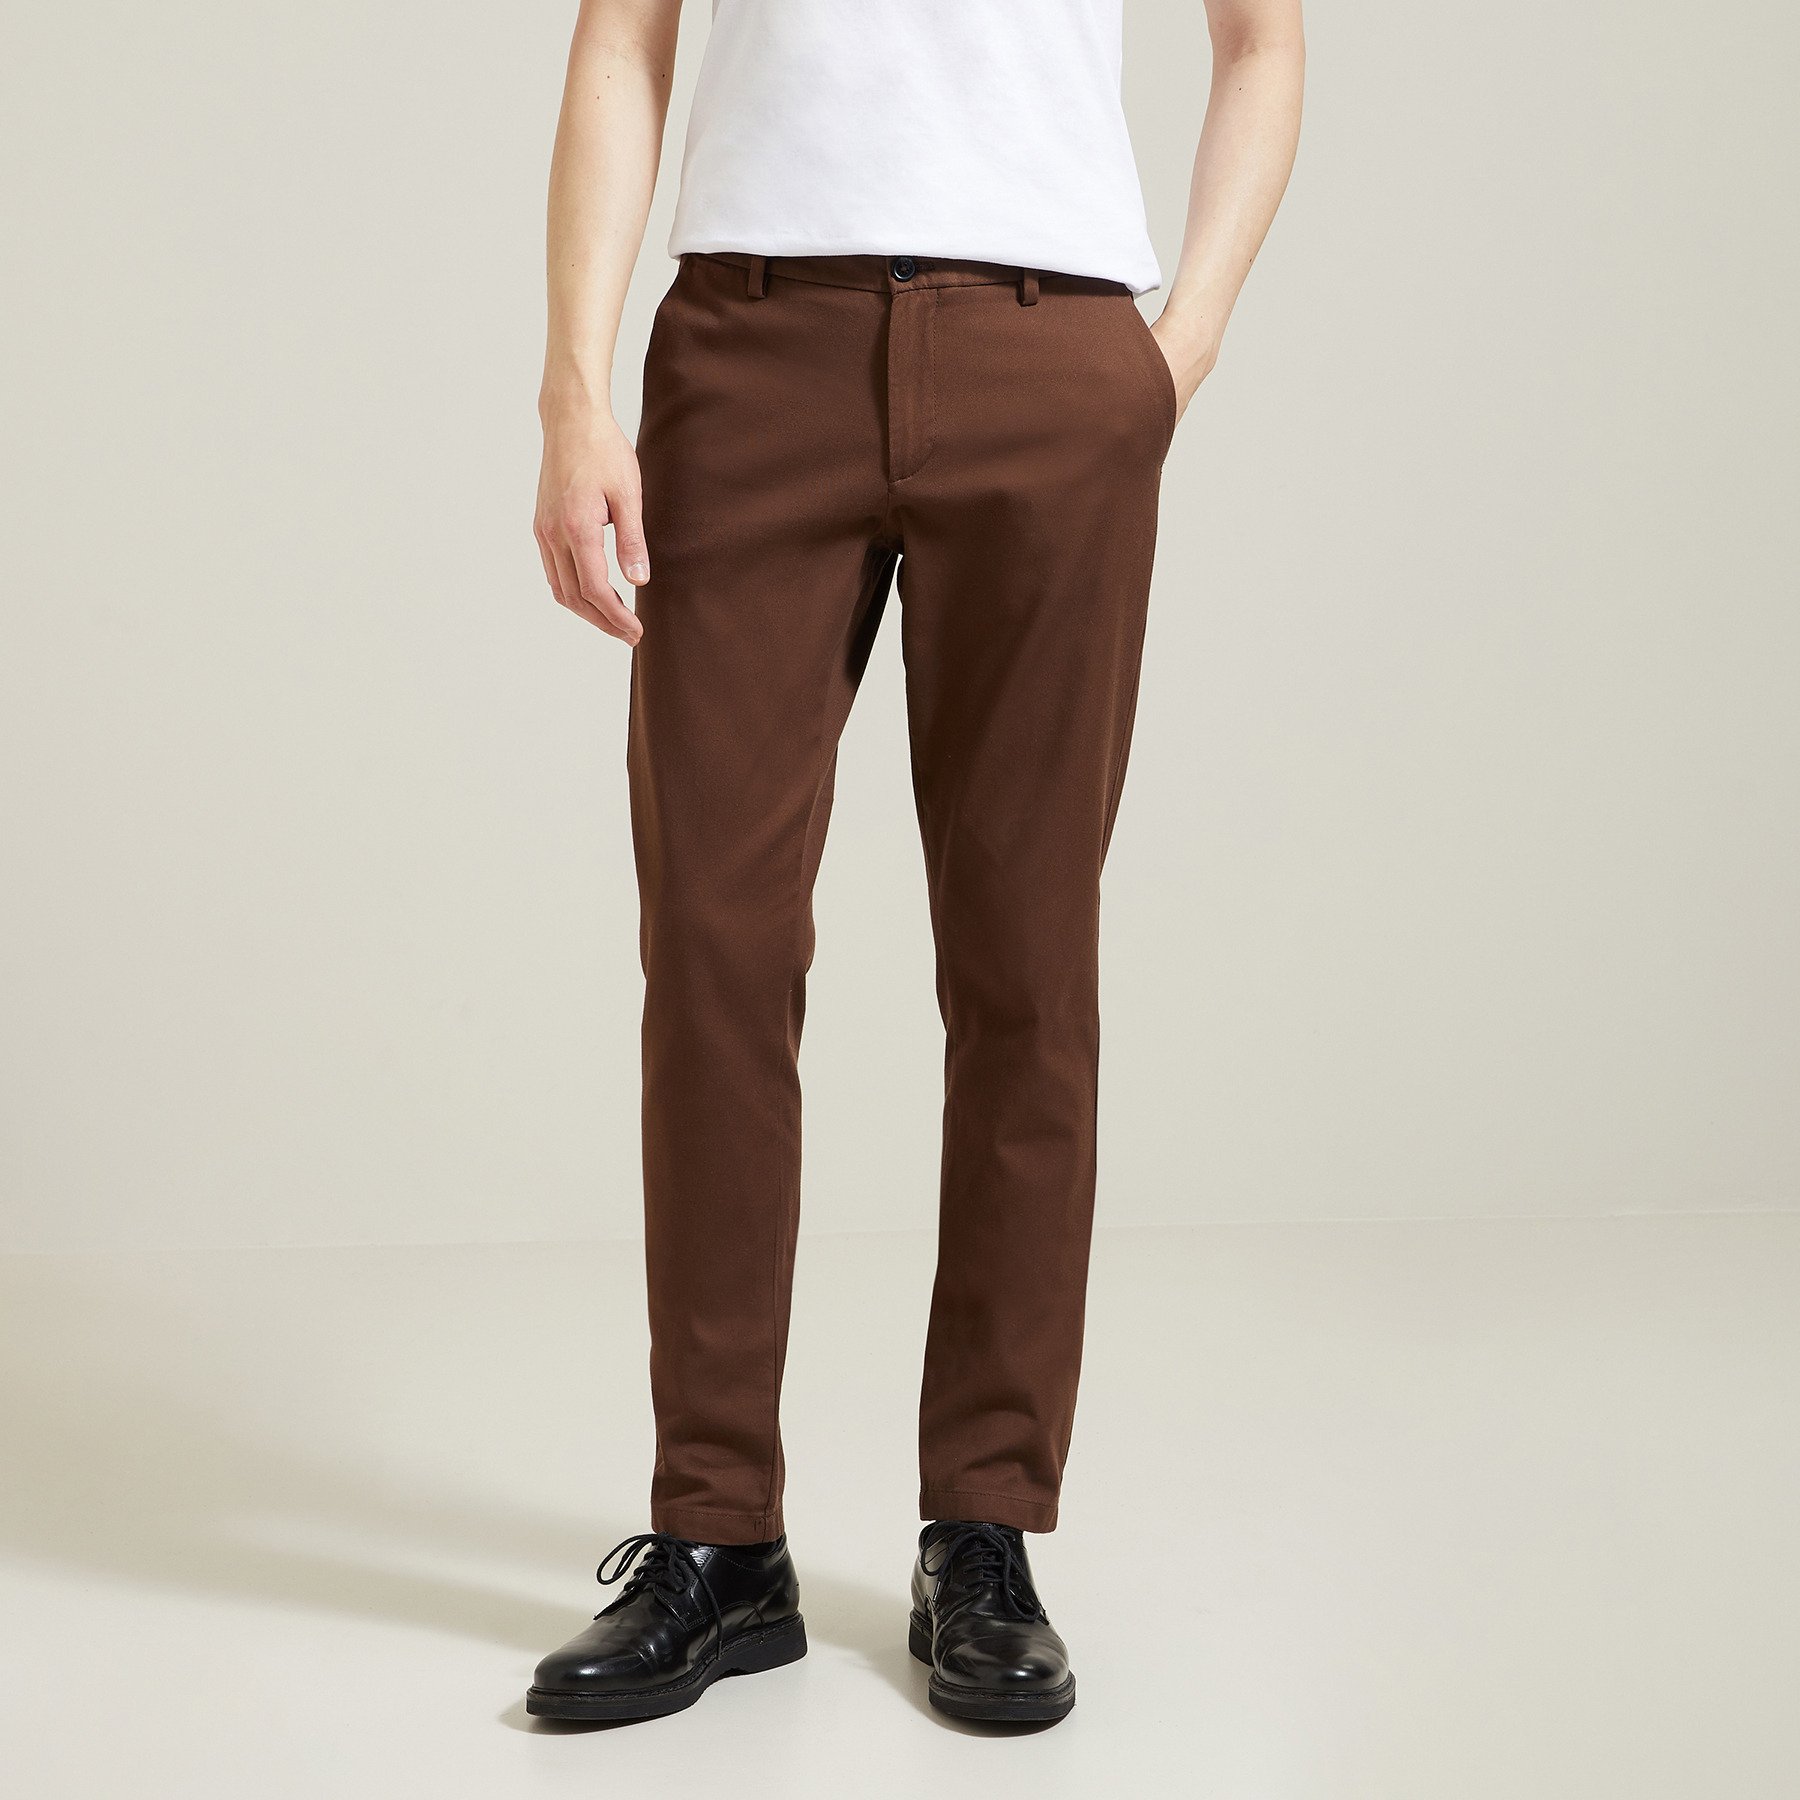 Pantalon chino slim urbain "le parfait by JULES" Marron 36 98% Coton, 2% Elasthanne Homme Jules